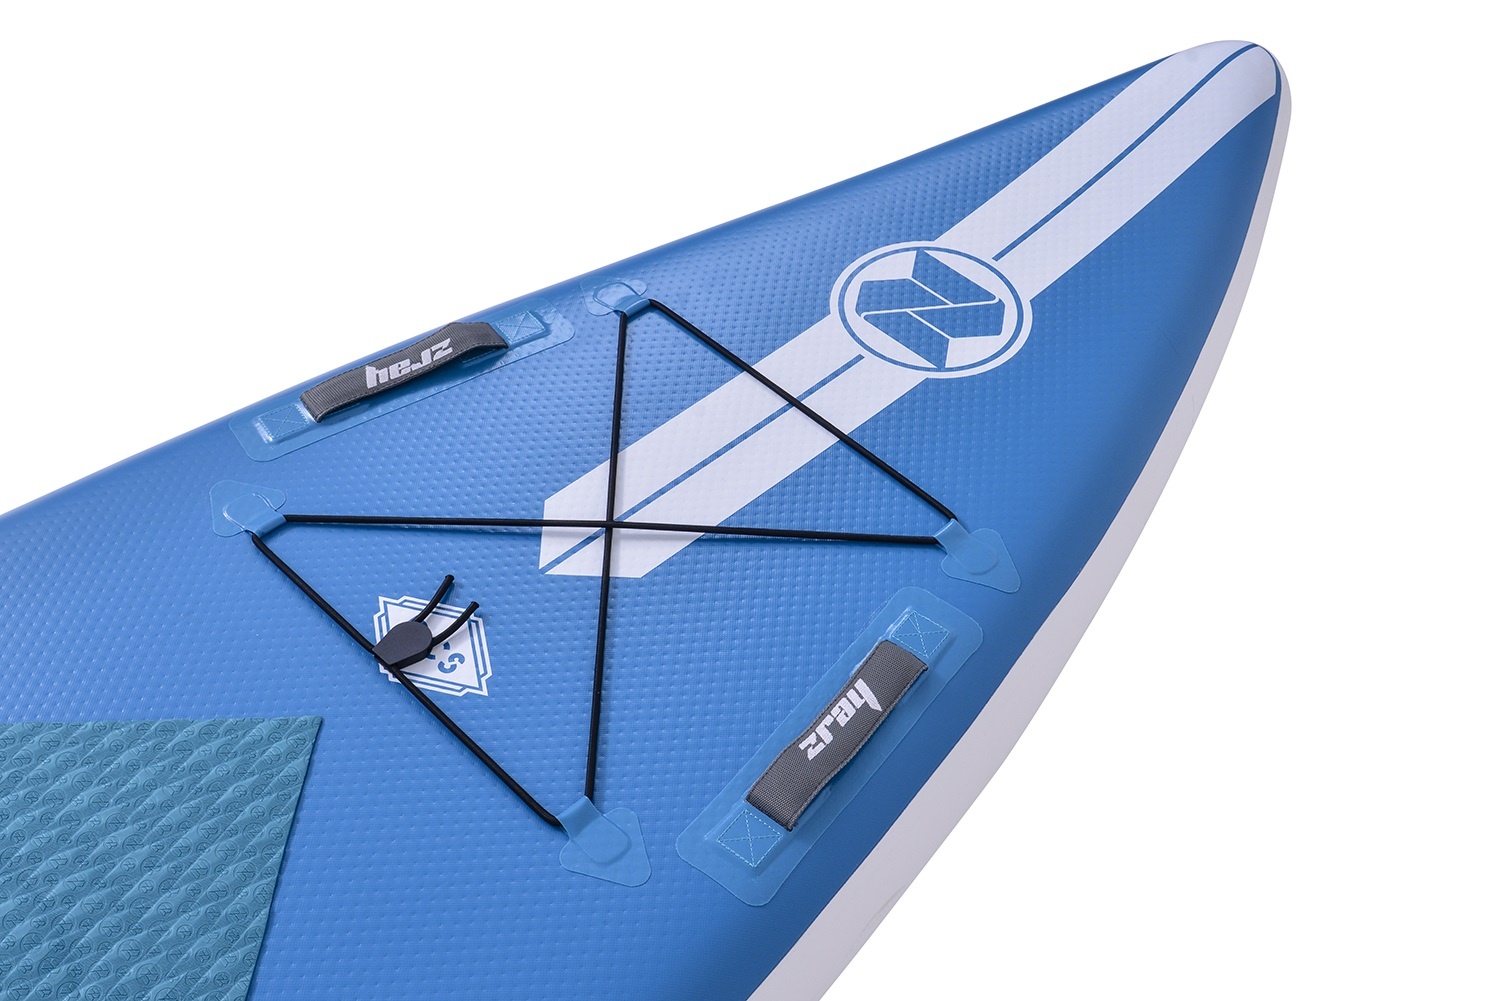 Prancha Insuflável Zray Fury Epic F4 12" 2021 - Prancha Paddle Surf | Sport Zone MKP